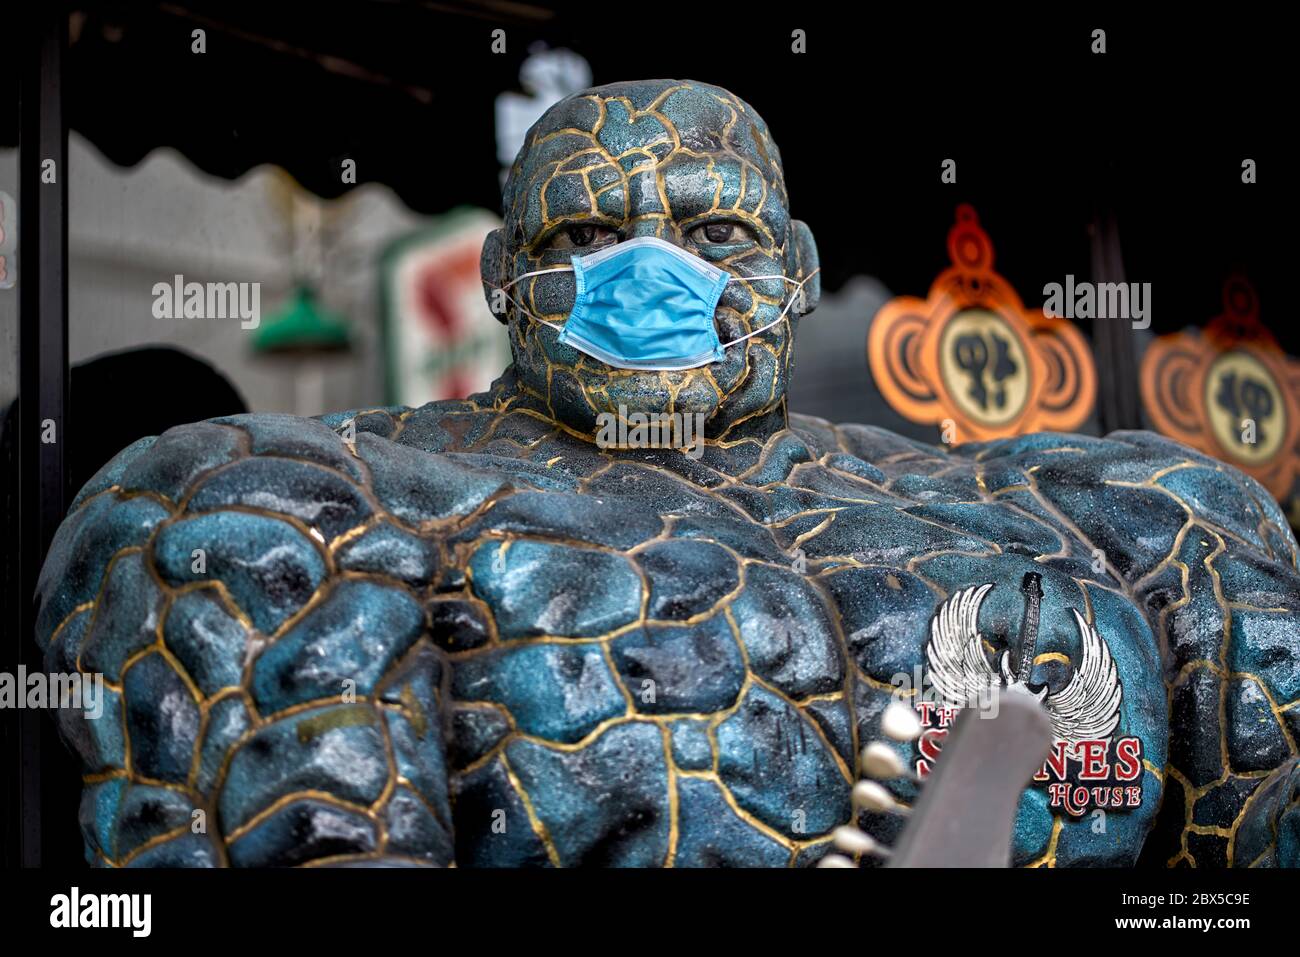 COVID-19 masque ; Statue de la 'chose', Marvel Comics fantastique quatre super héros portant un masque de protection contre le virus Corona Banque D'Images